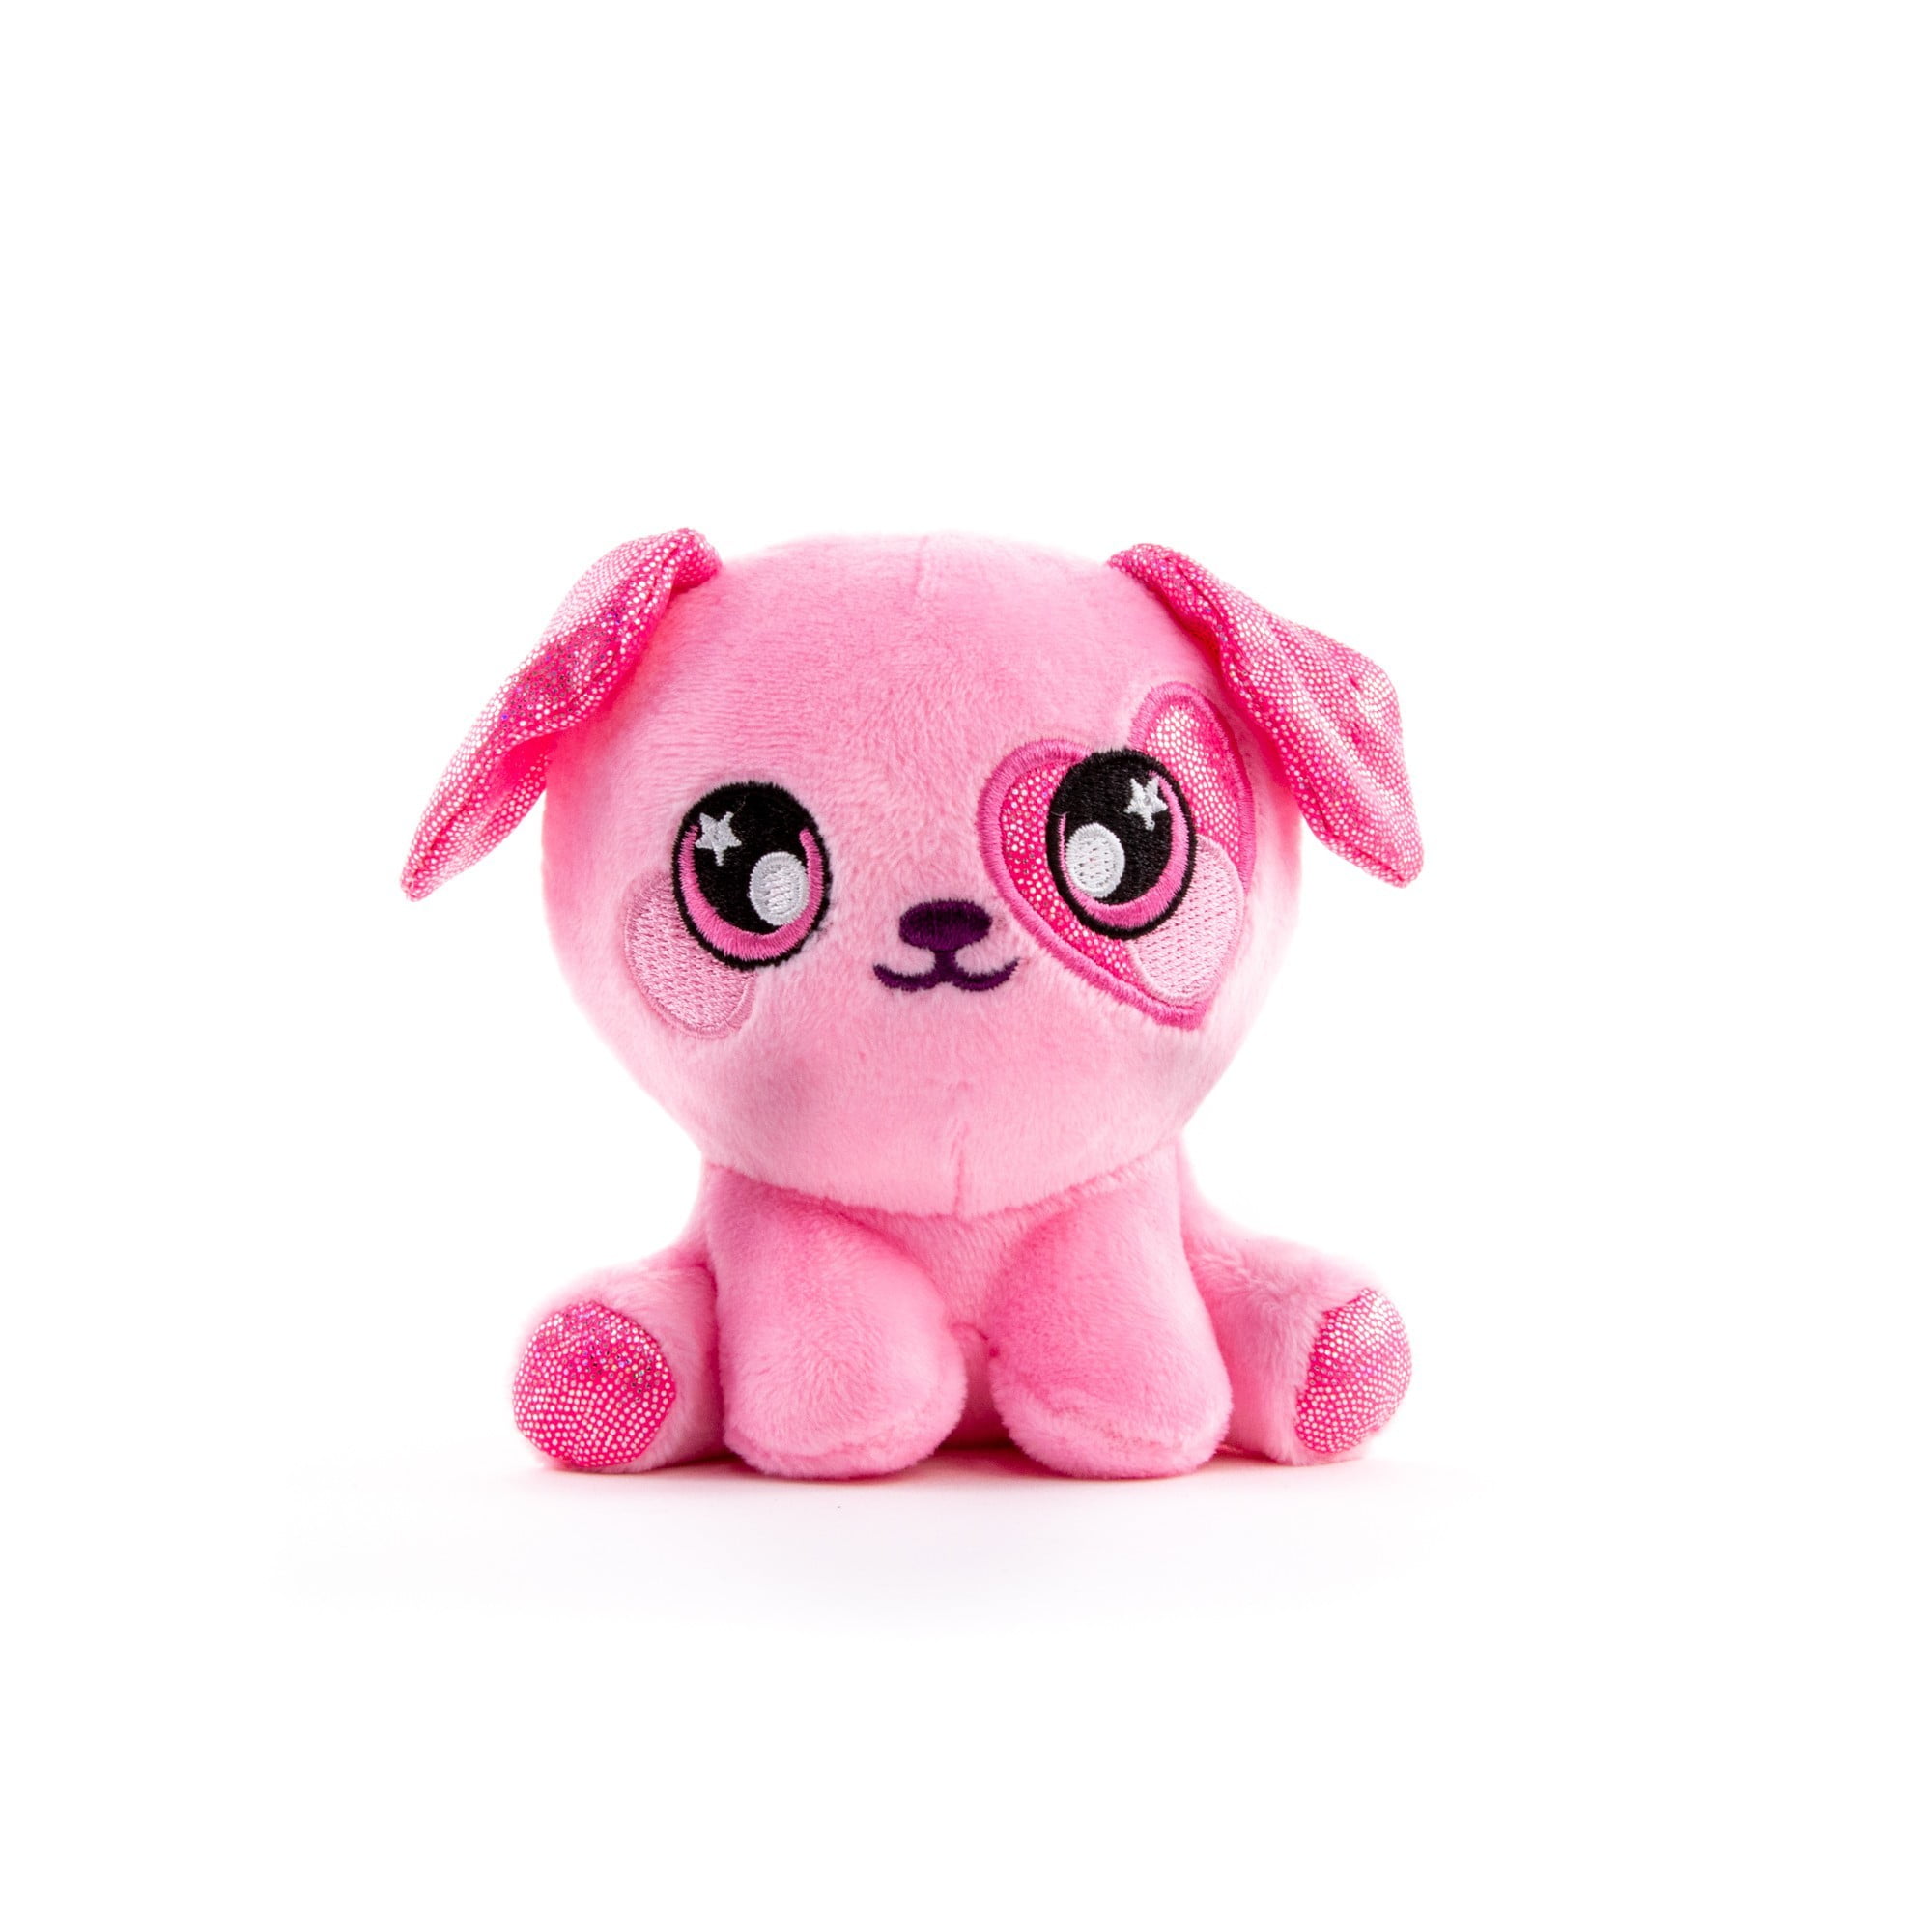 pink dog stuffed animal